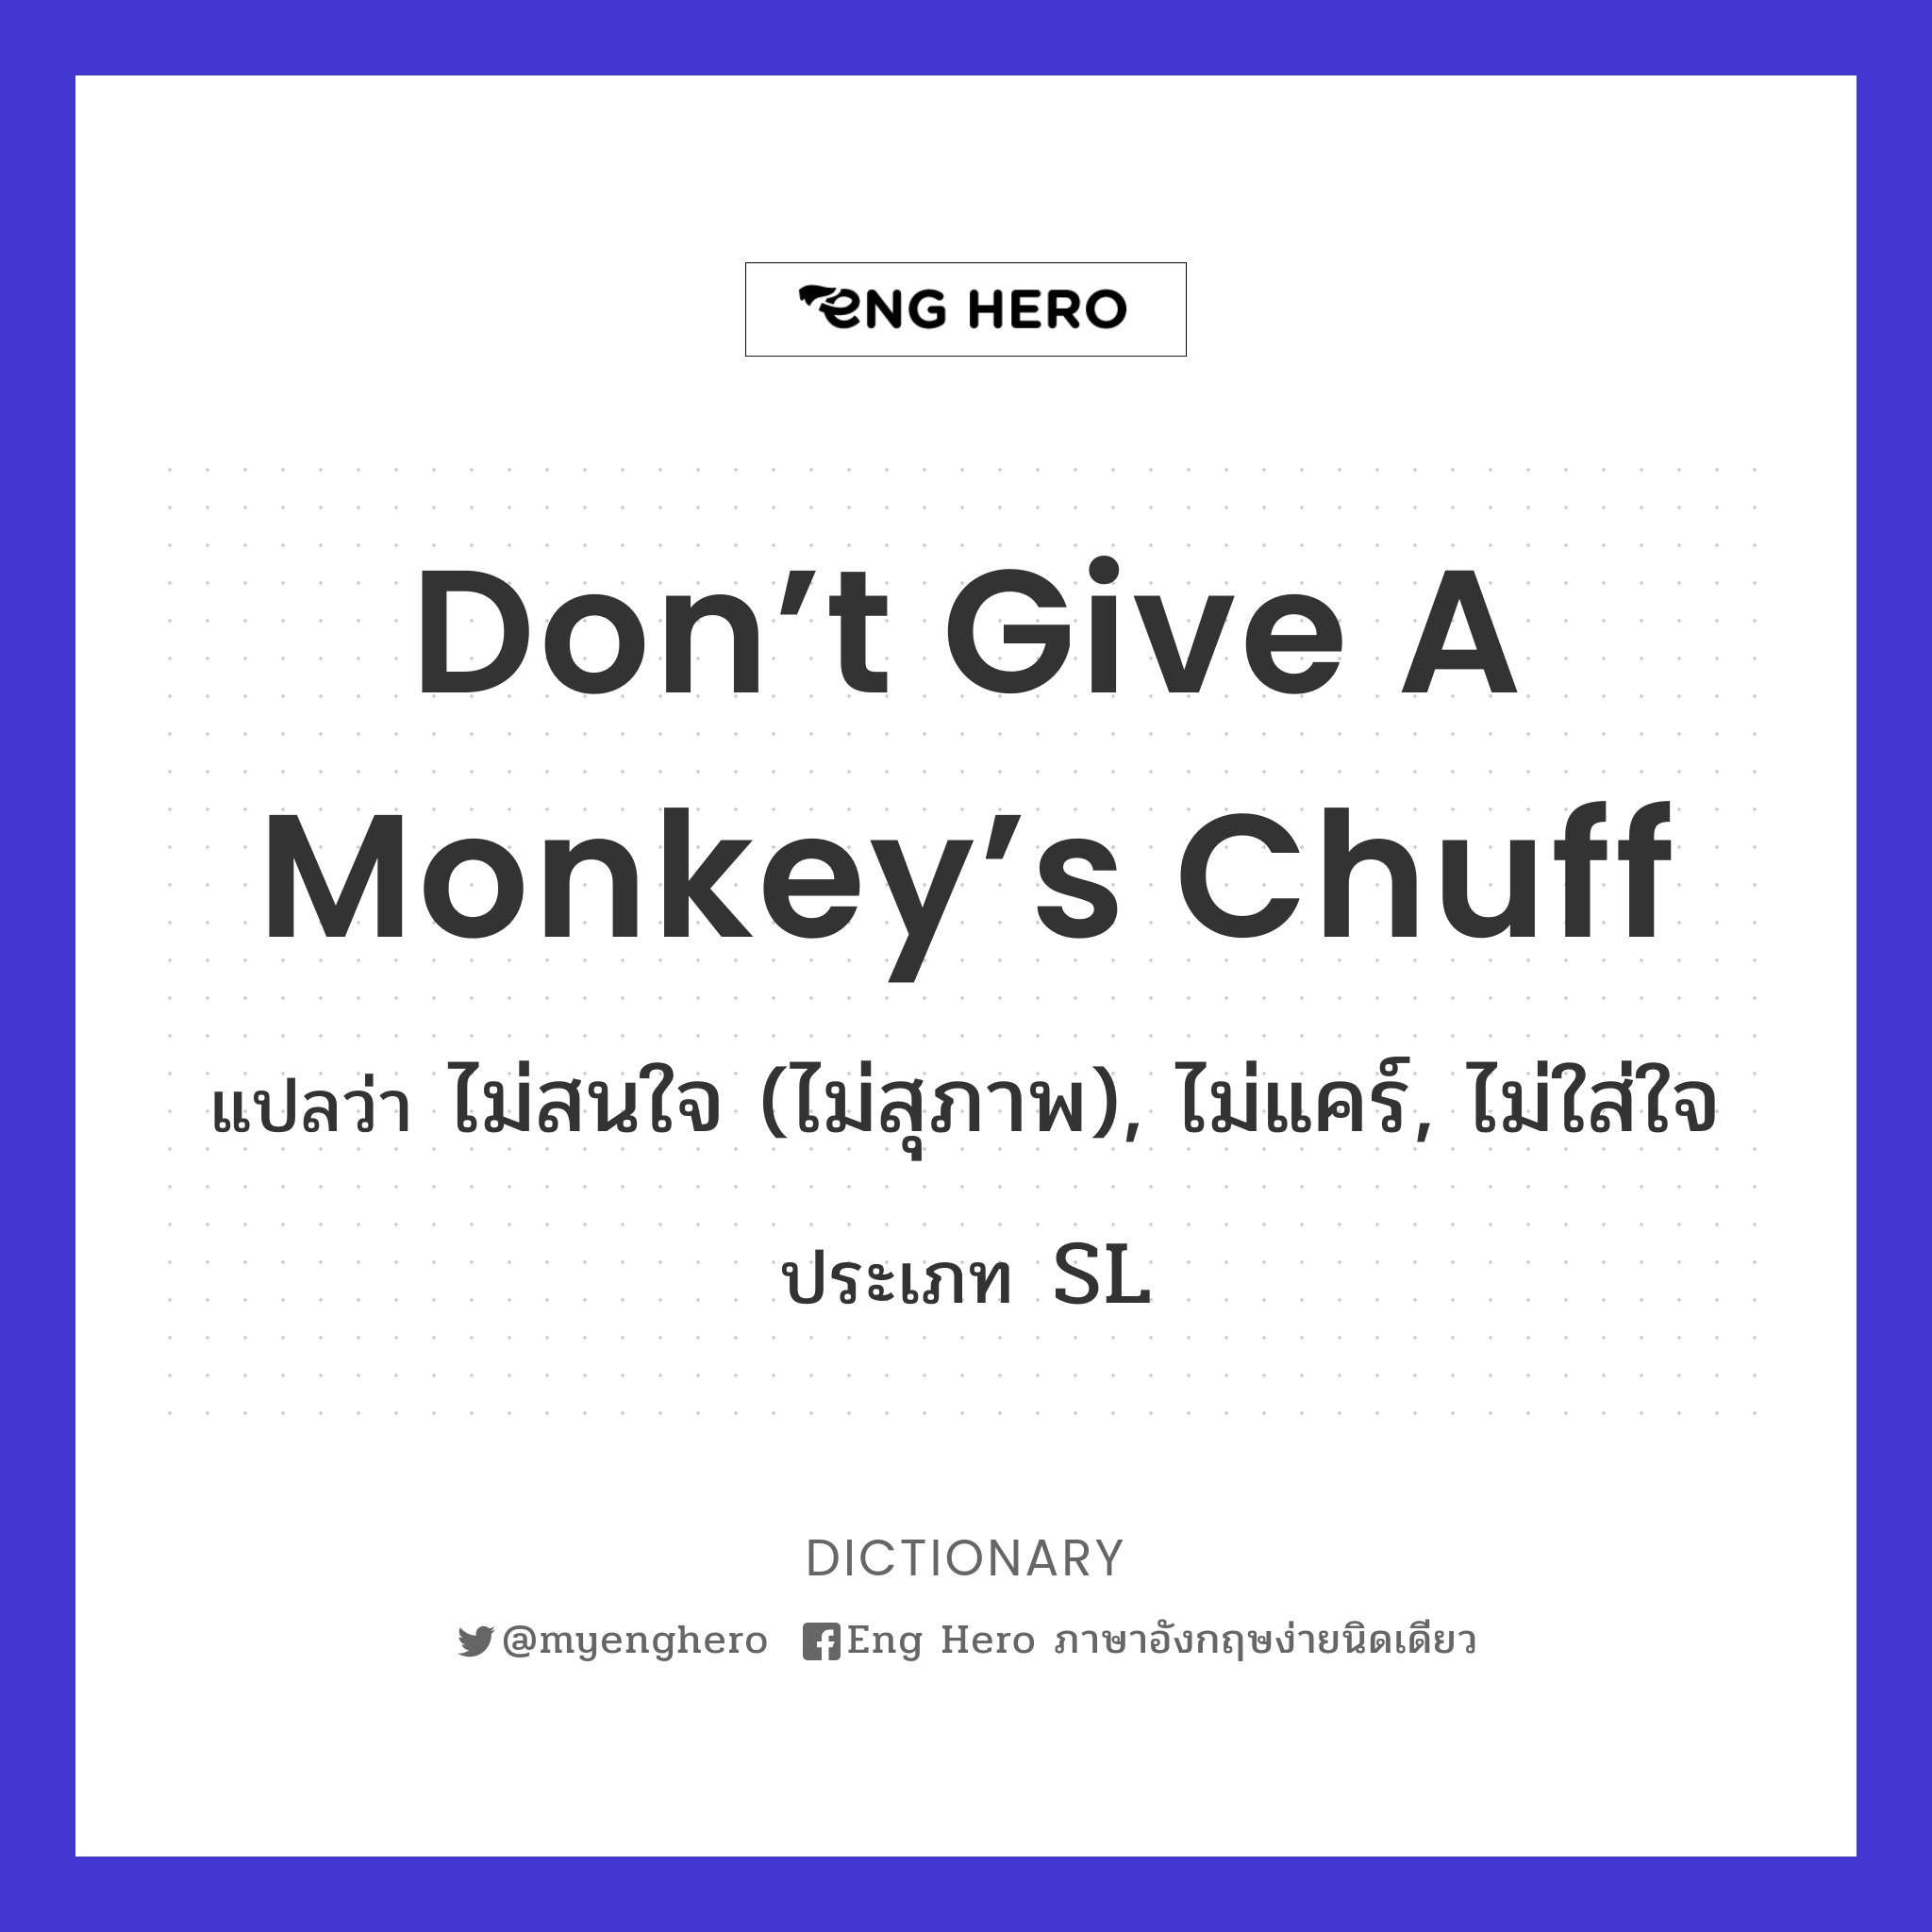 Don’t give a monkey’s chuff